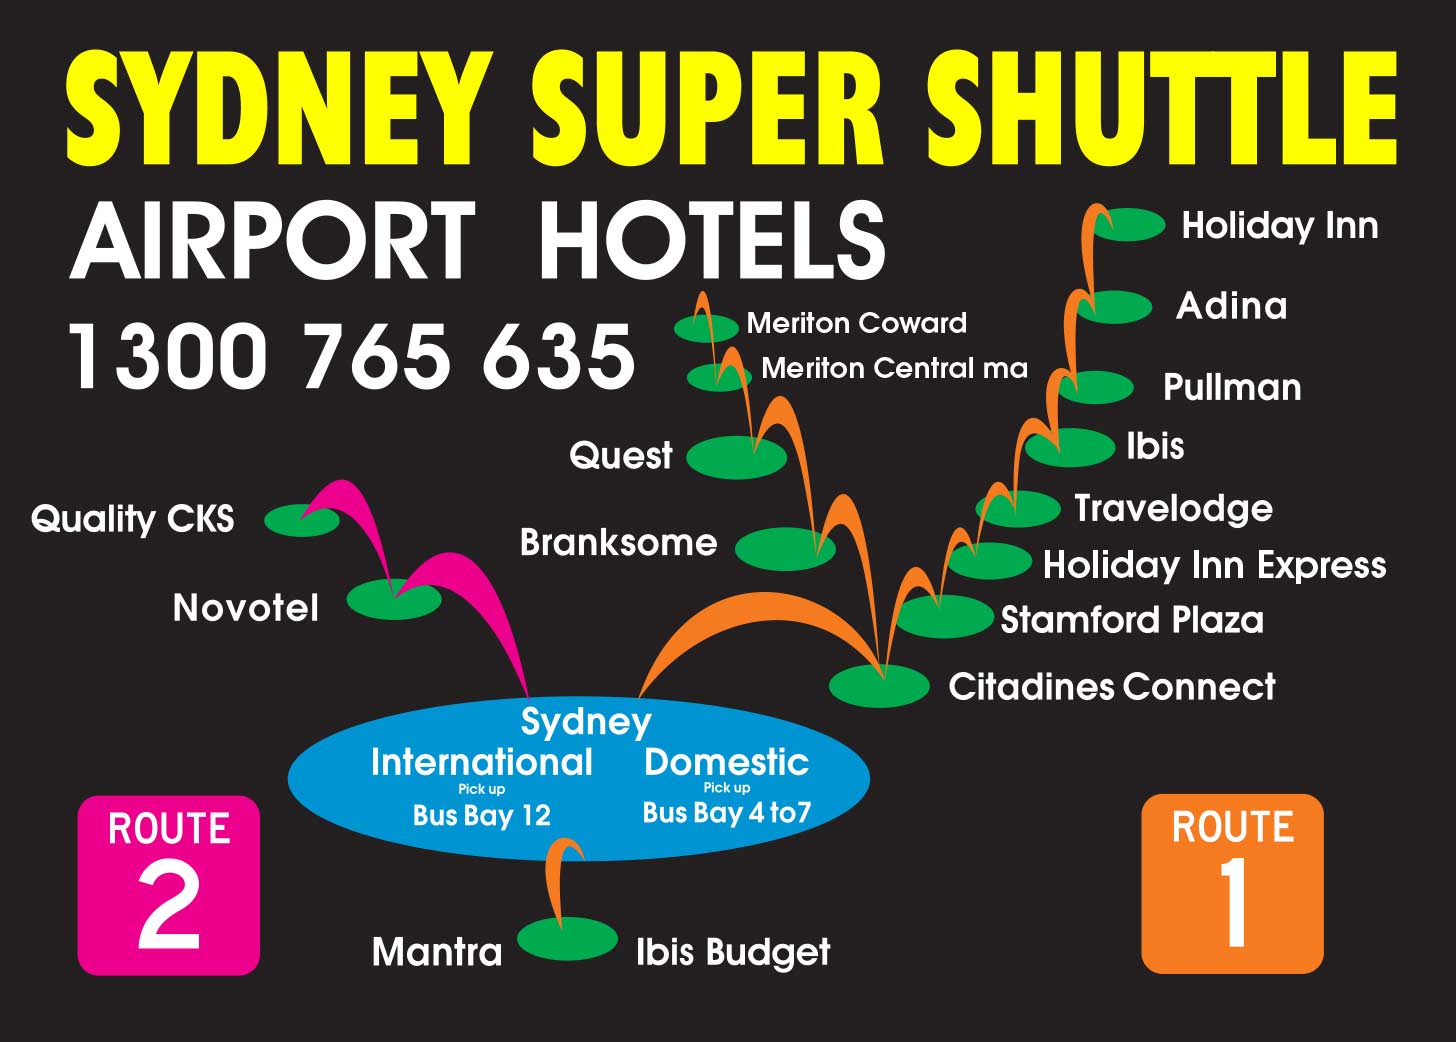 airport-hotels-shuttle-service-sydney-super-shuttle